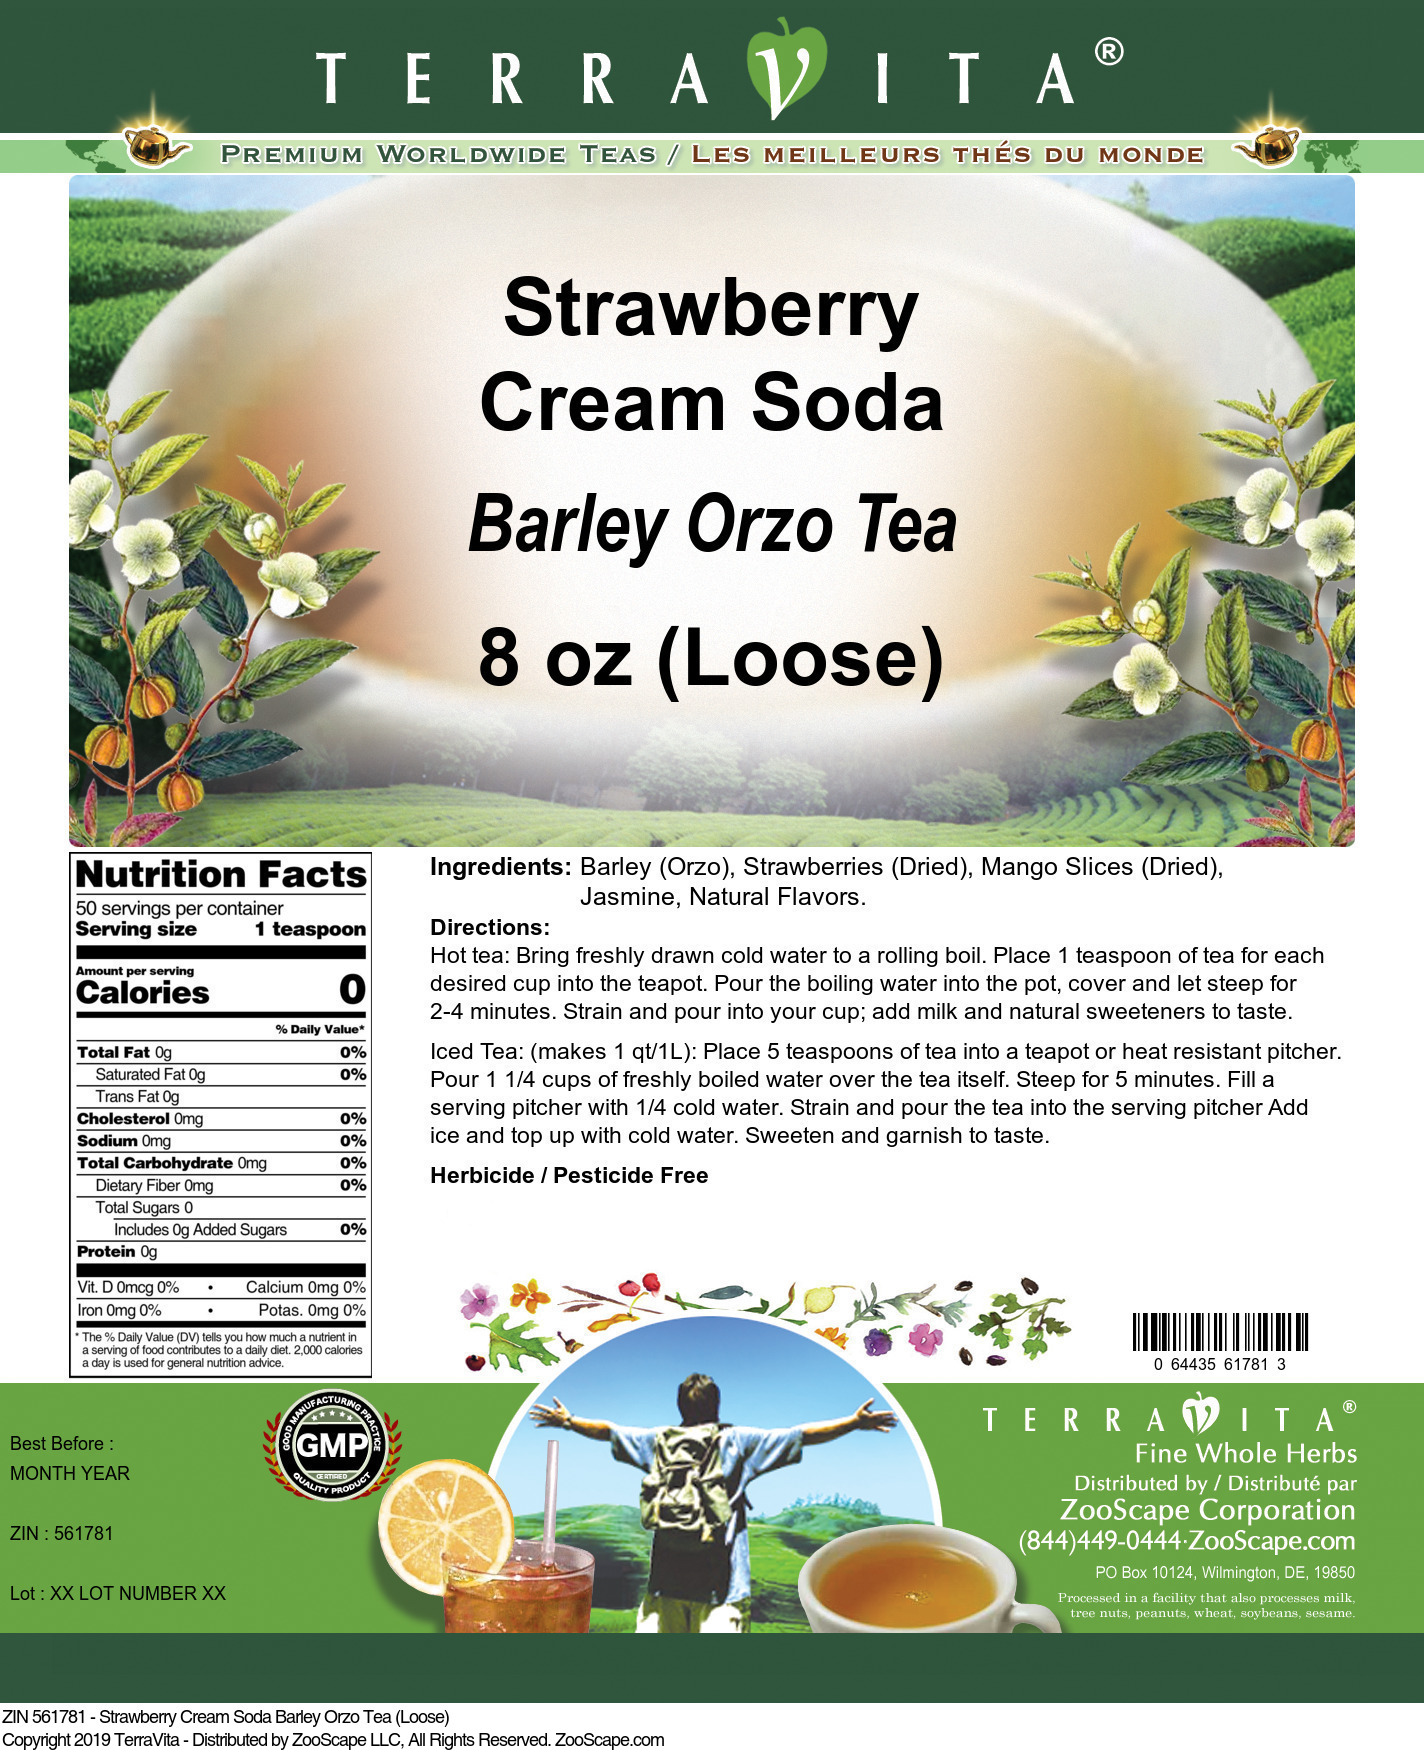 Strawberry Cream Soda Barley Orzo Tea (Loose) - Label